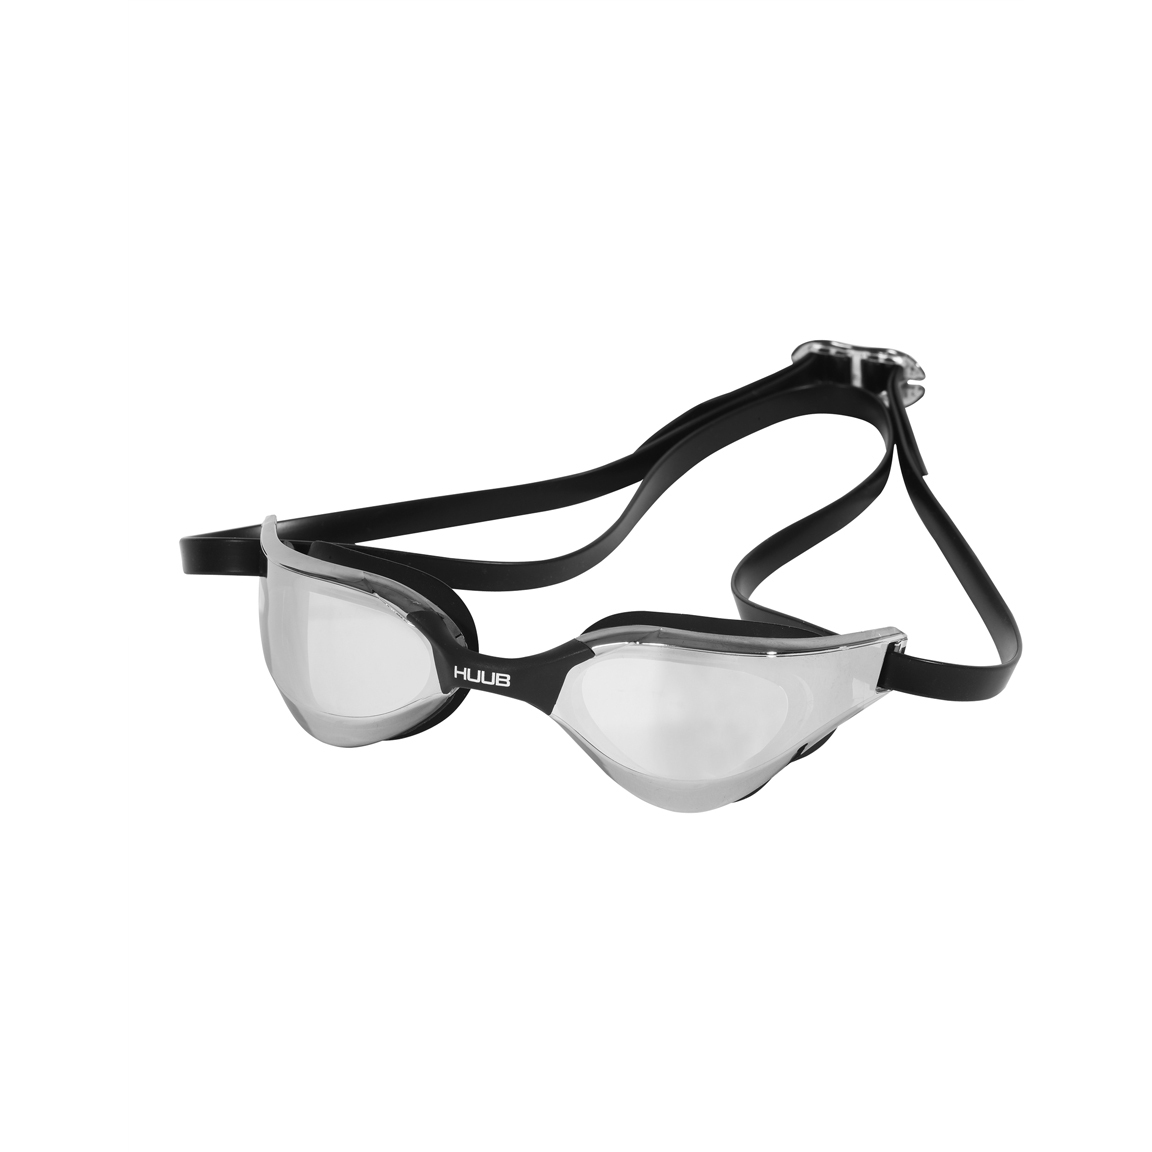 Productfoto van HUUB Design Thomas Lurz Zwembril - zwart